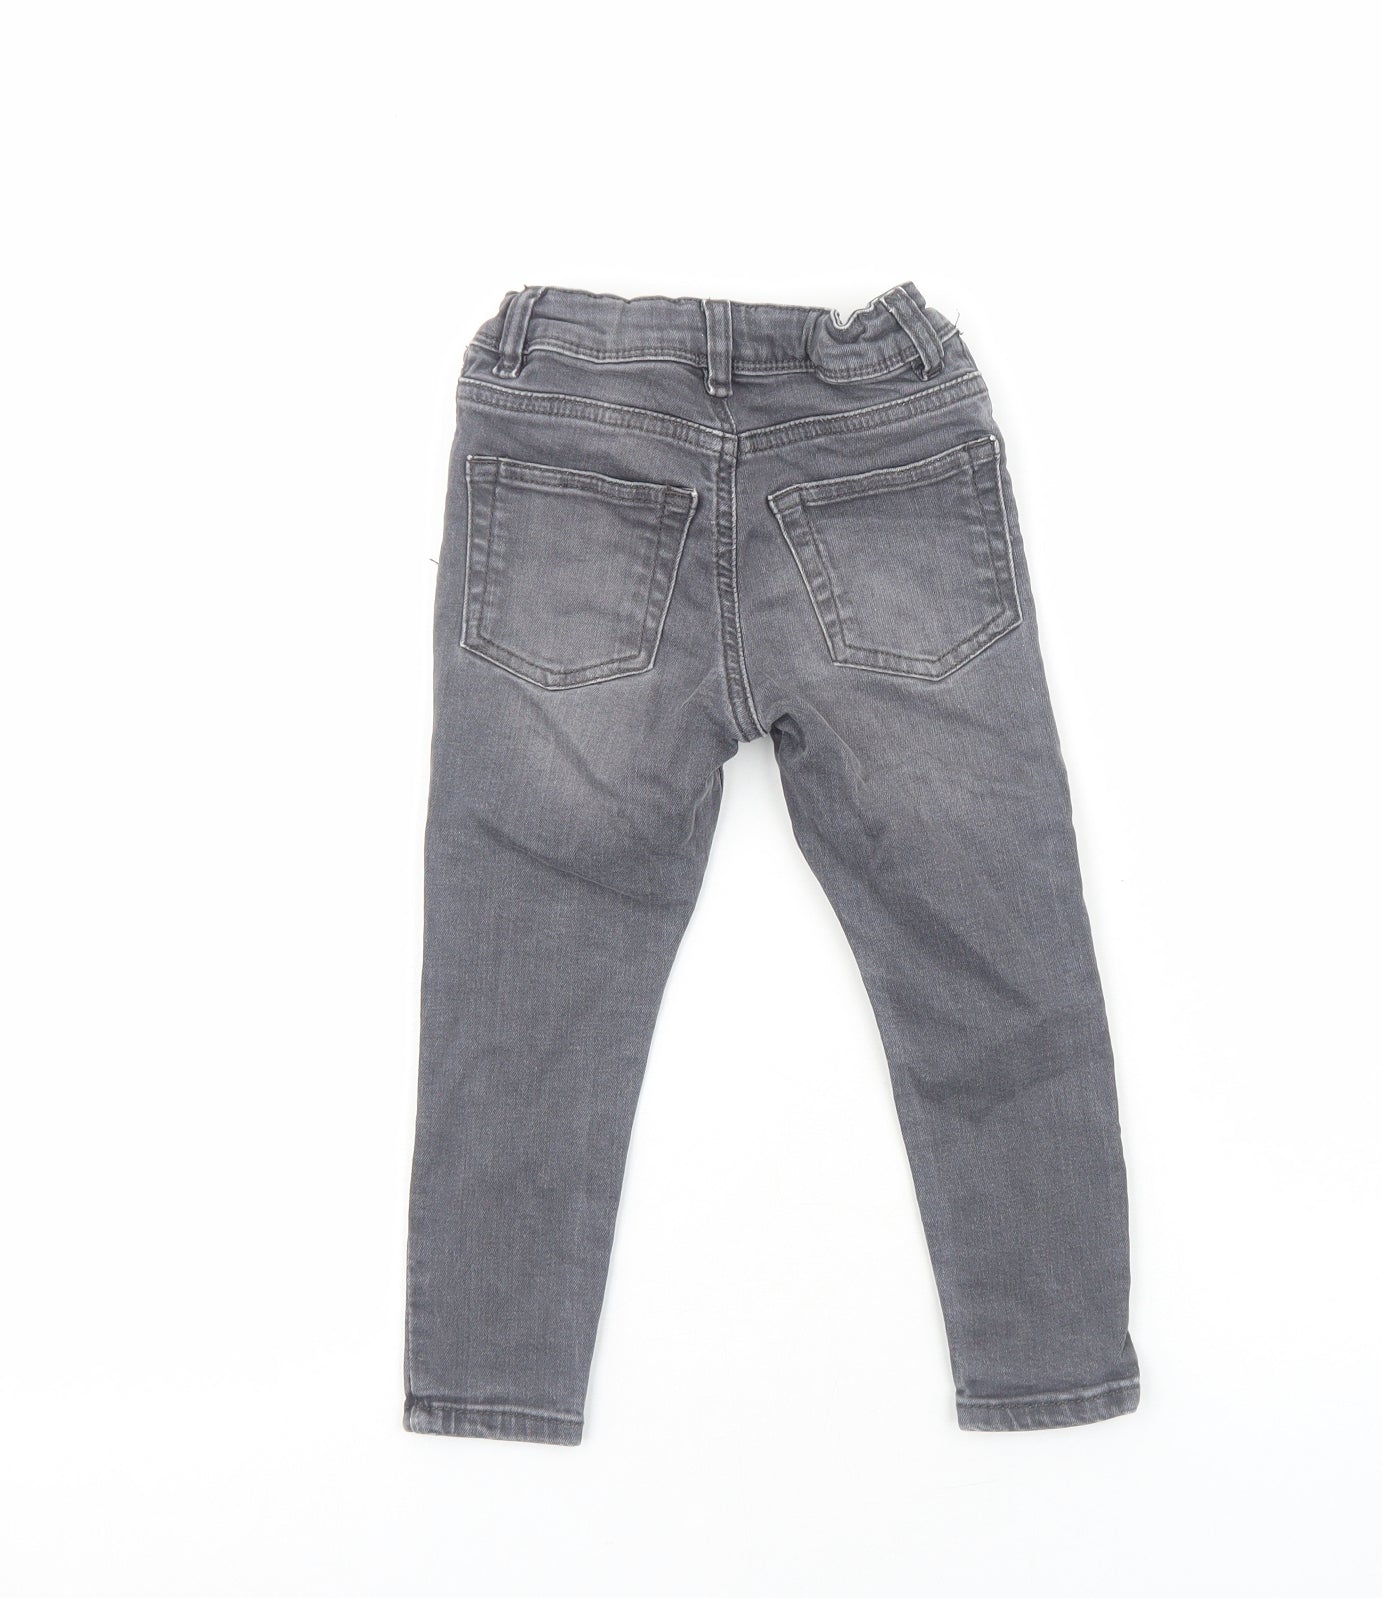 Primark Boys Grey Cotton Skinny Jeans Size 2-3 Years Regular Snap